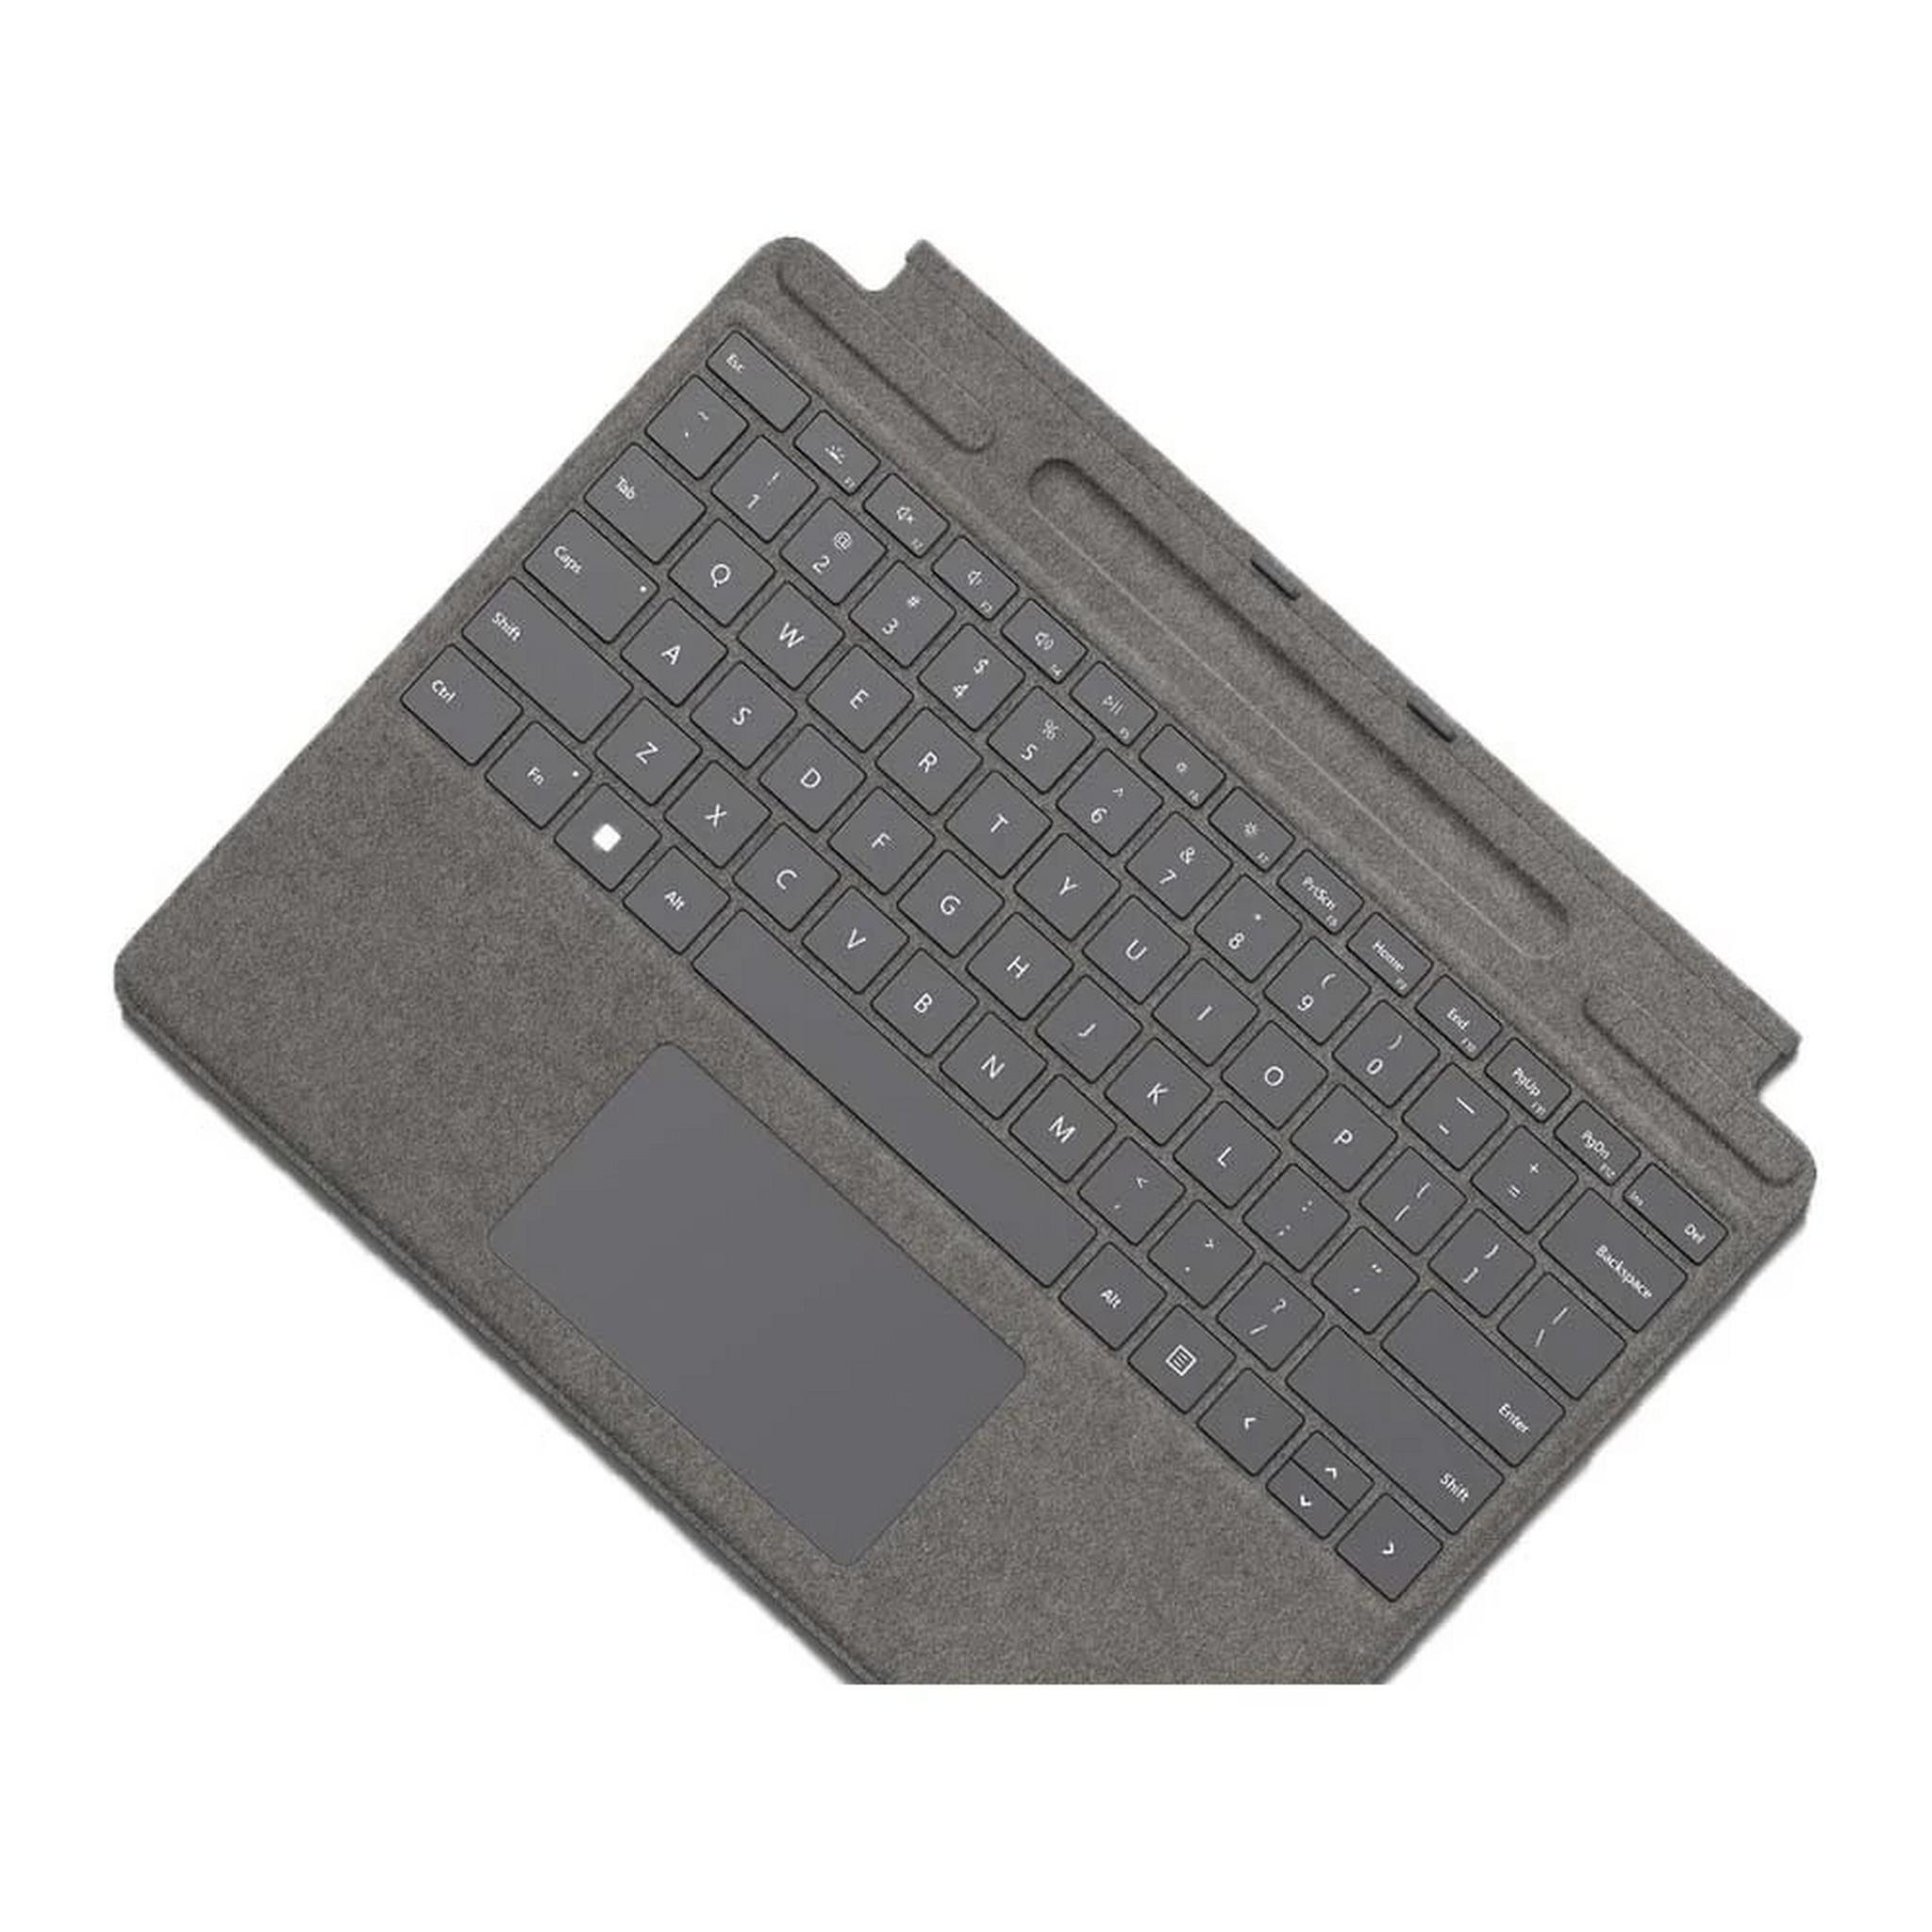 Microsoft Surface Pro Signature Keyboard With Pen - Platinum